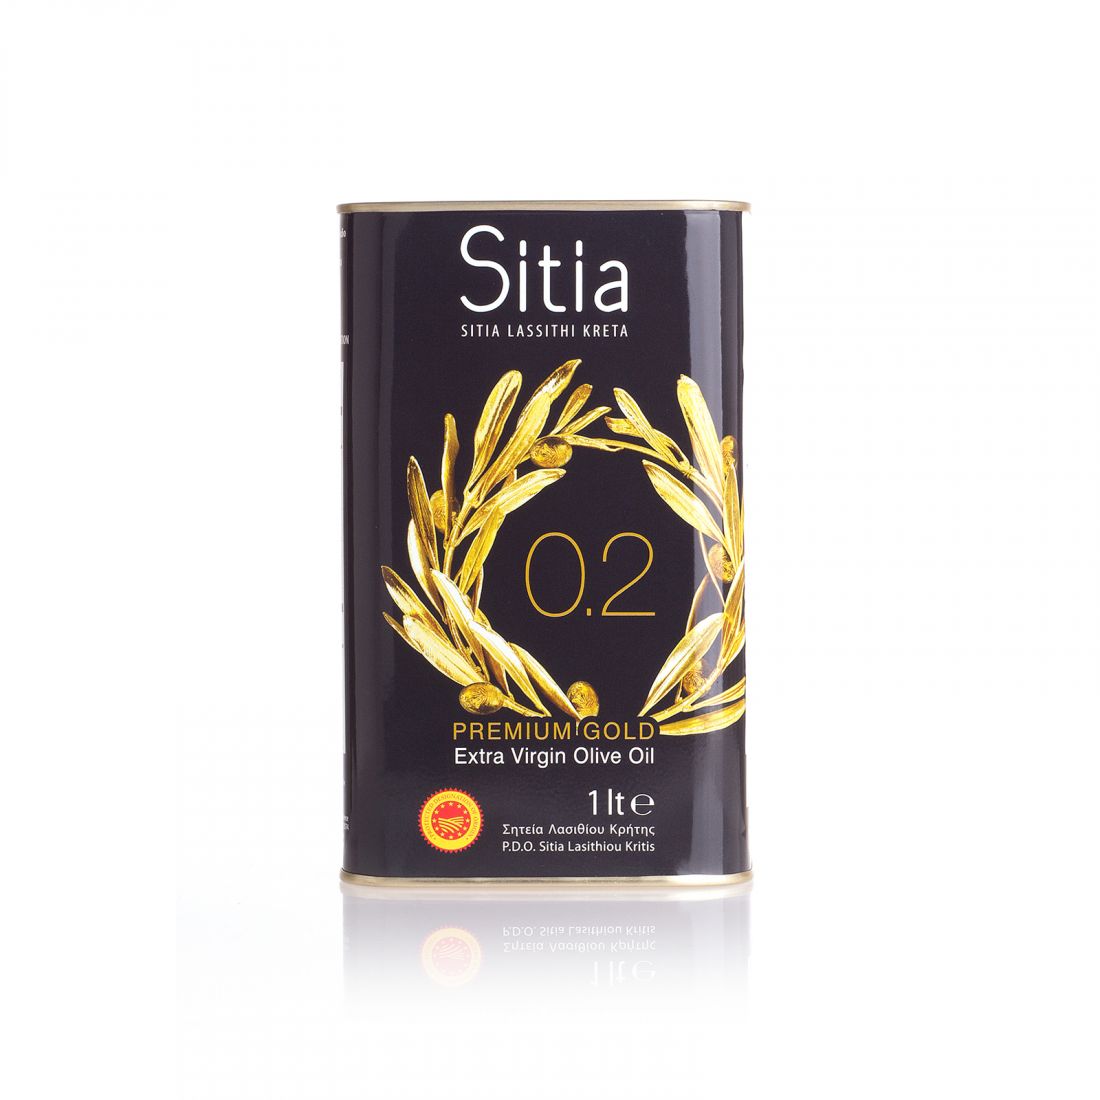 Оливковое масло SITIA - 1 л 0.2 экстра вирджин PDO